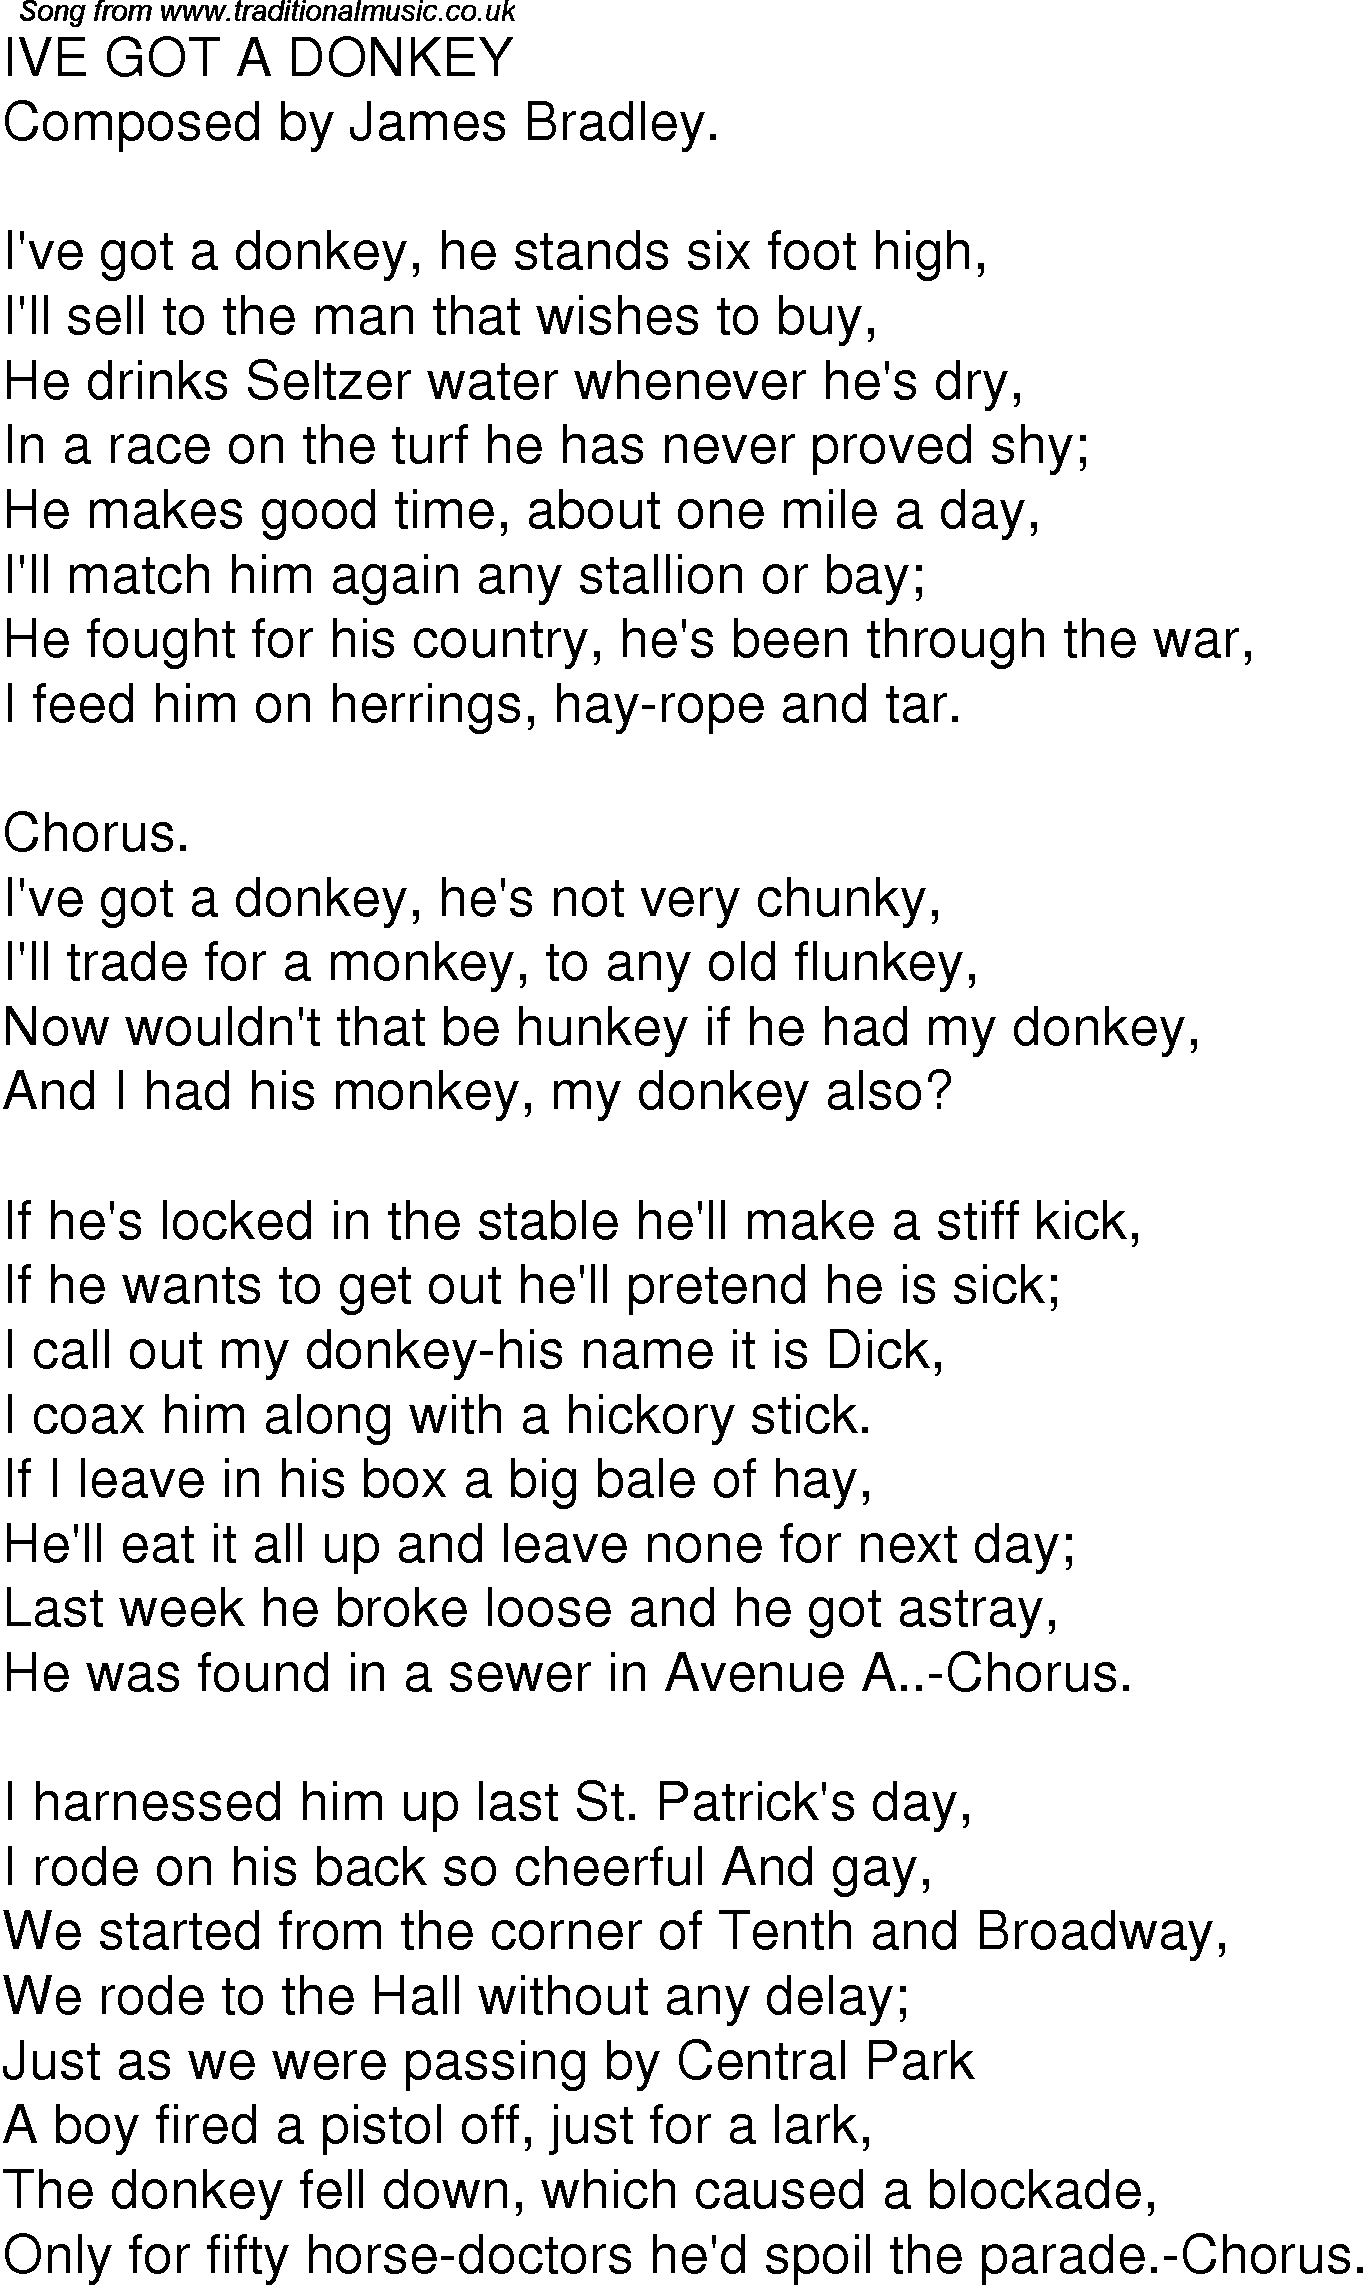 Old Time Song Lyrics for 02 I've Got A Donkey